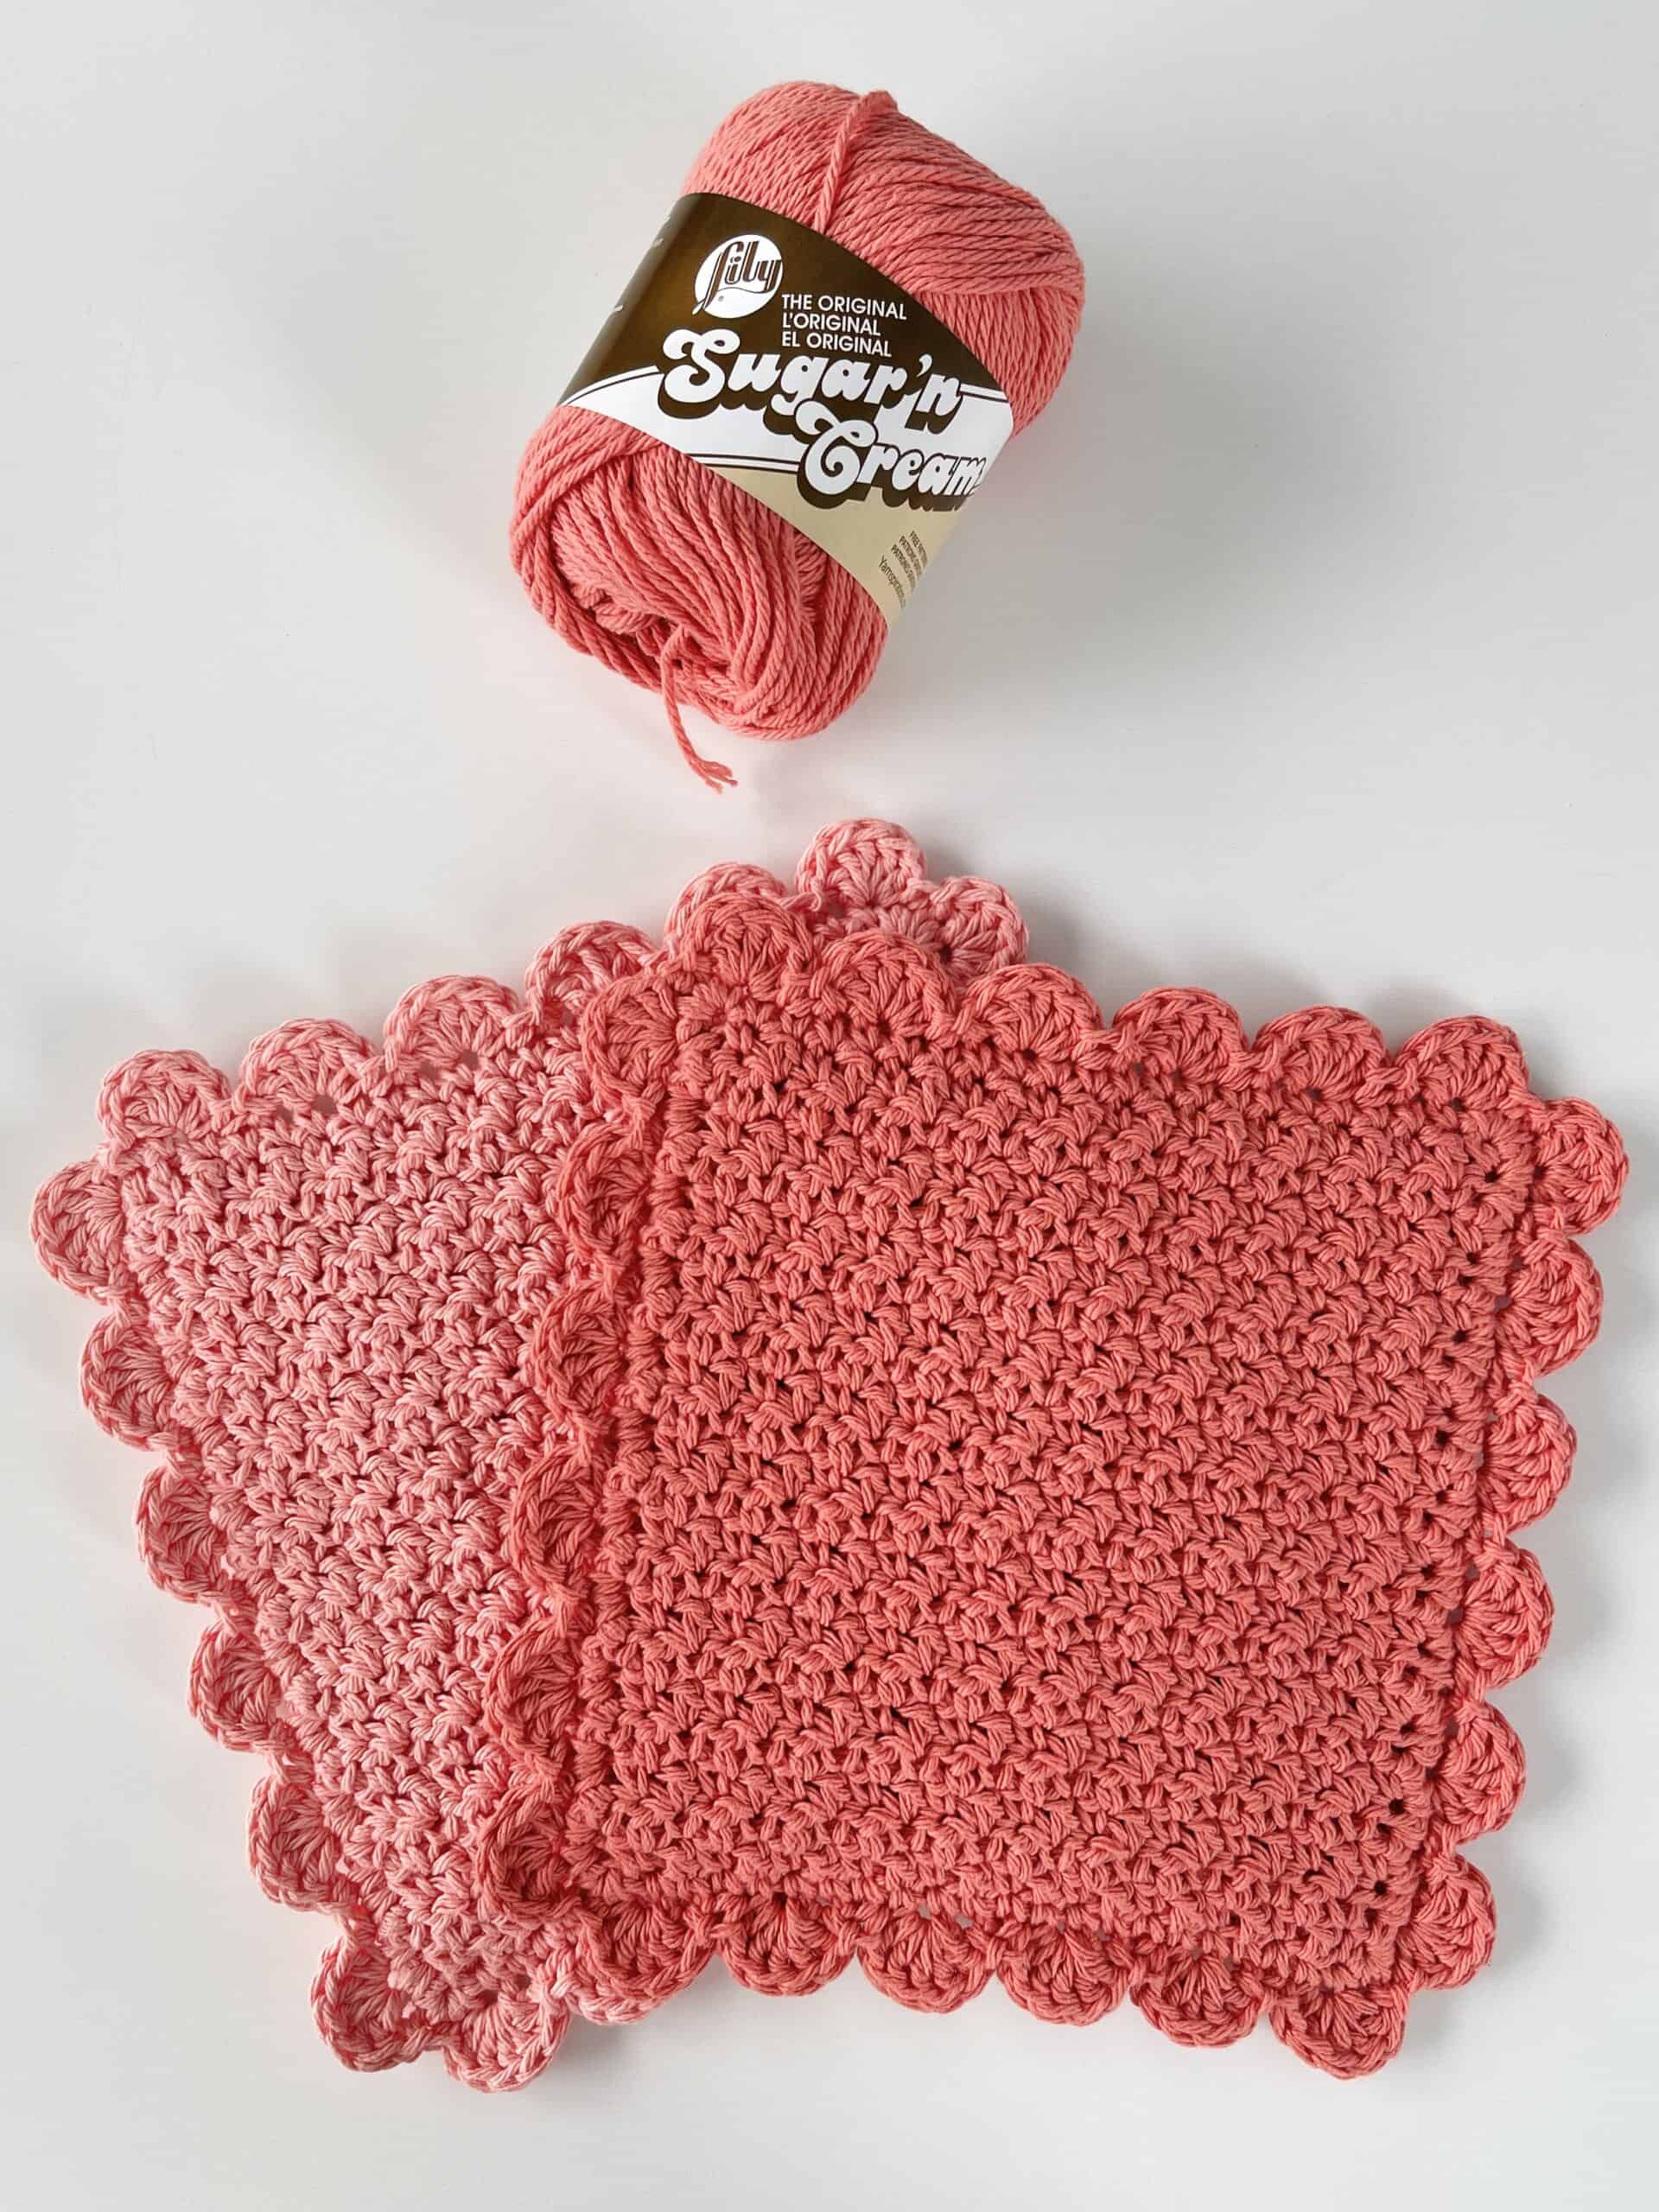 Beginner Crochet Project with Yarnspirations - Daisy Farm Crafts